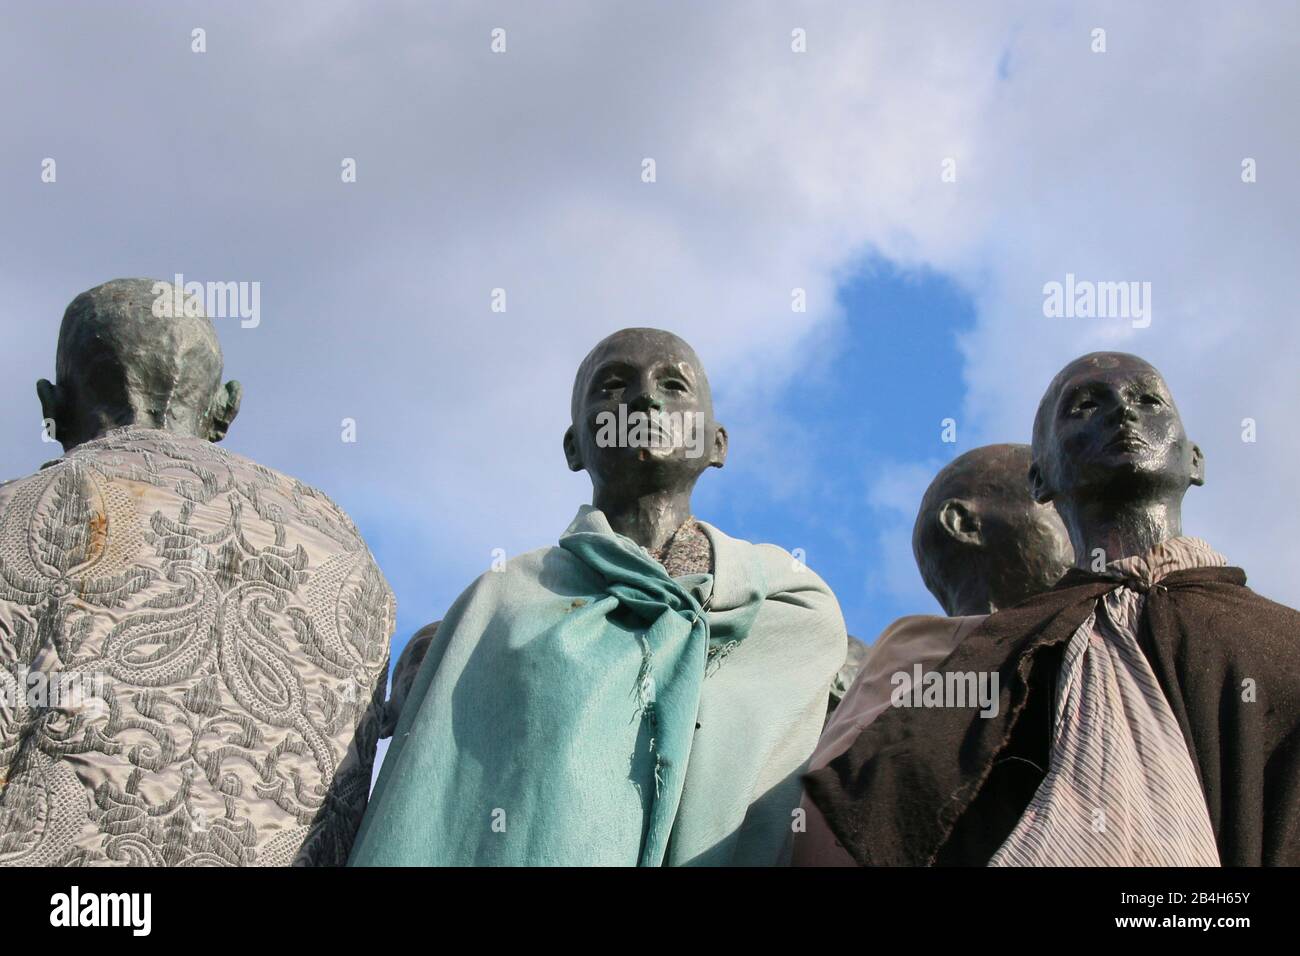 Magdeburg, Flüchtlingsschiff "Al-hadi Djumaa", 70 Bronzefiguren des dänischen Künstlers Jens Galschiøt an Bord, Kunstprojekt. Stockfoto